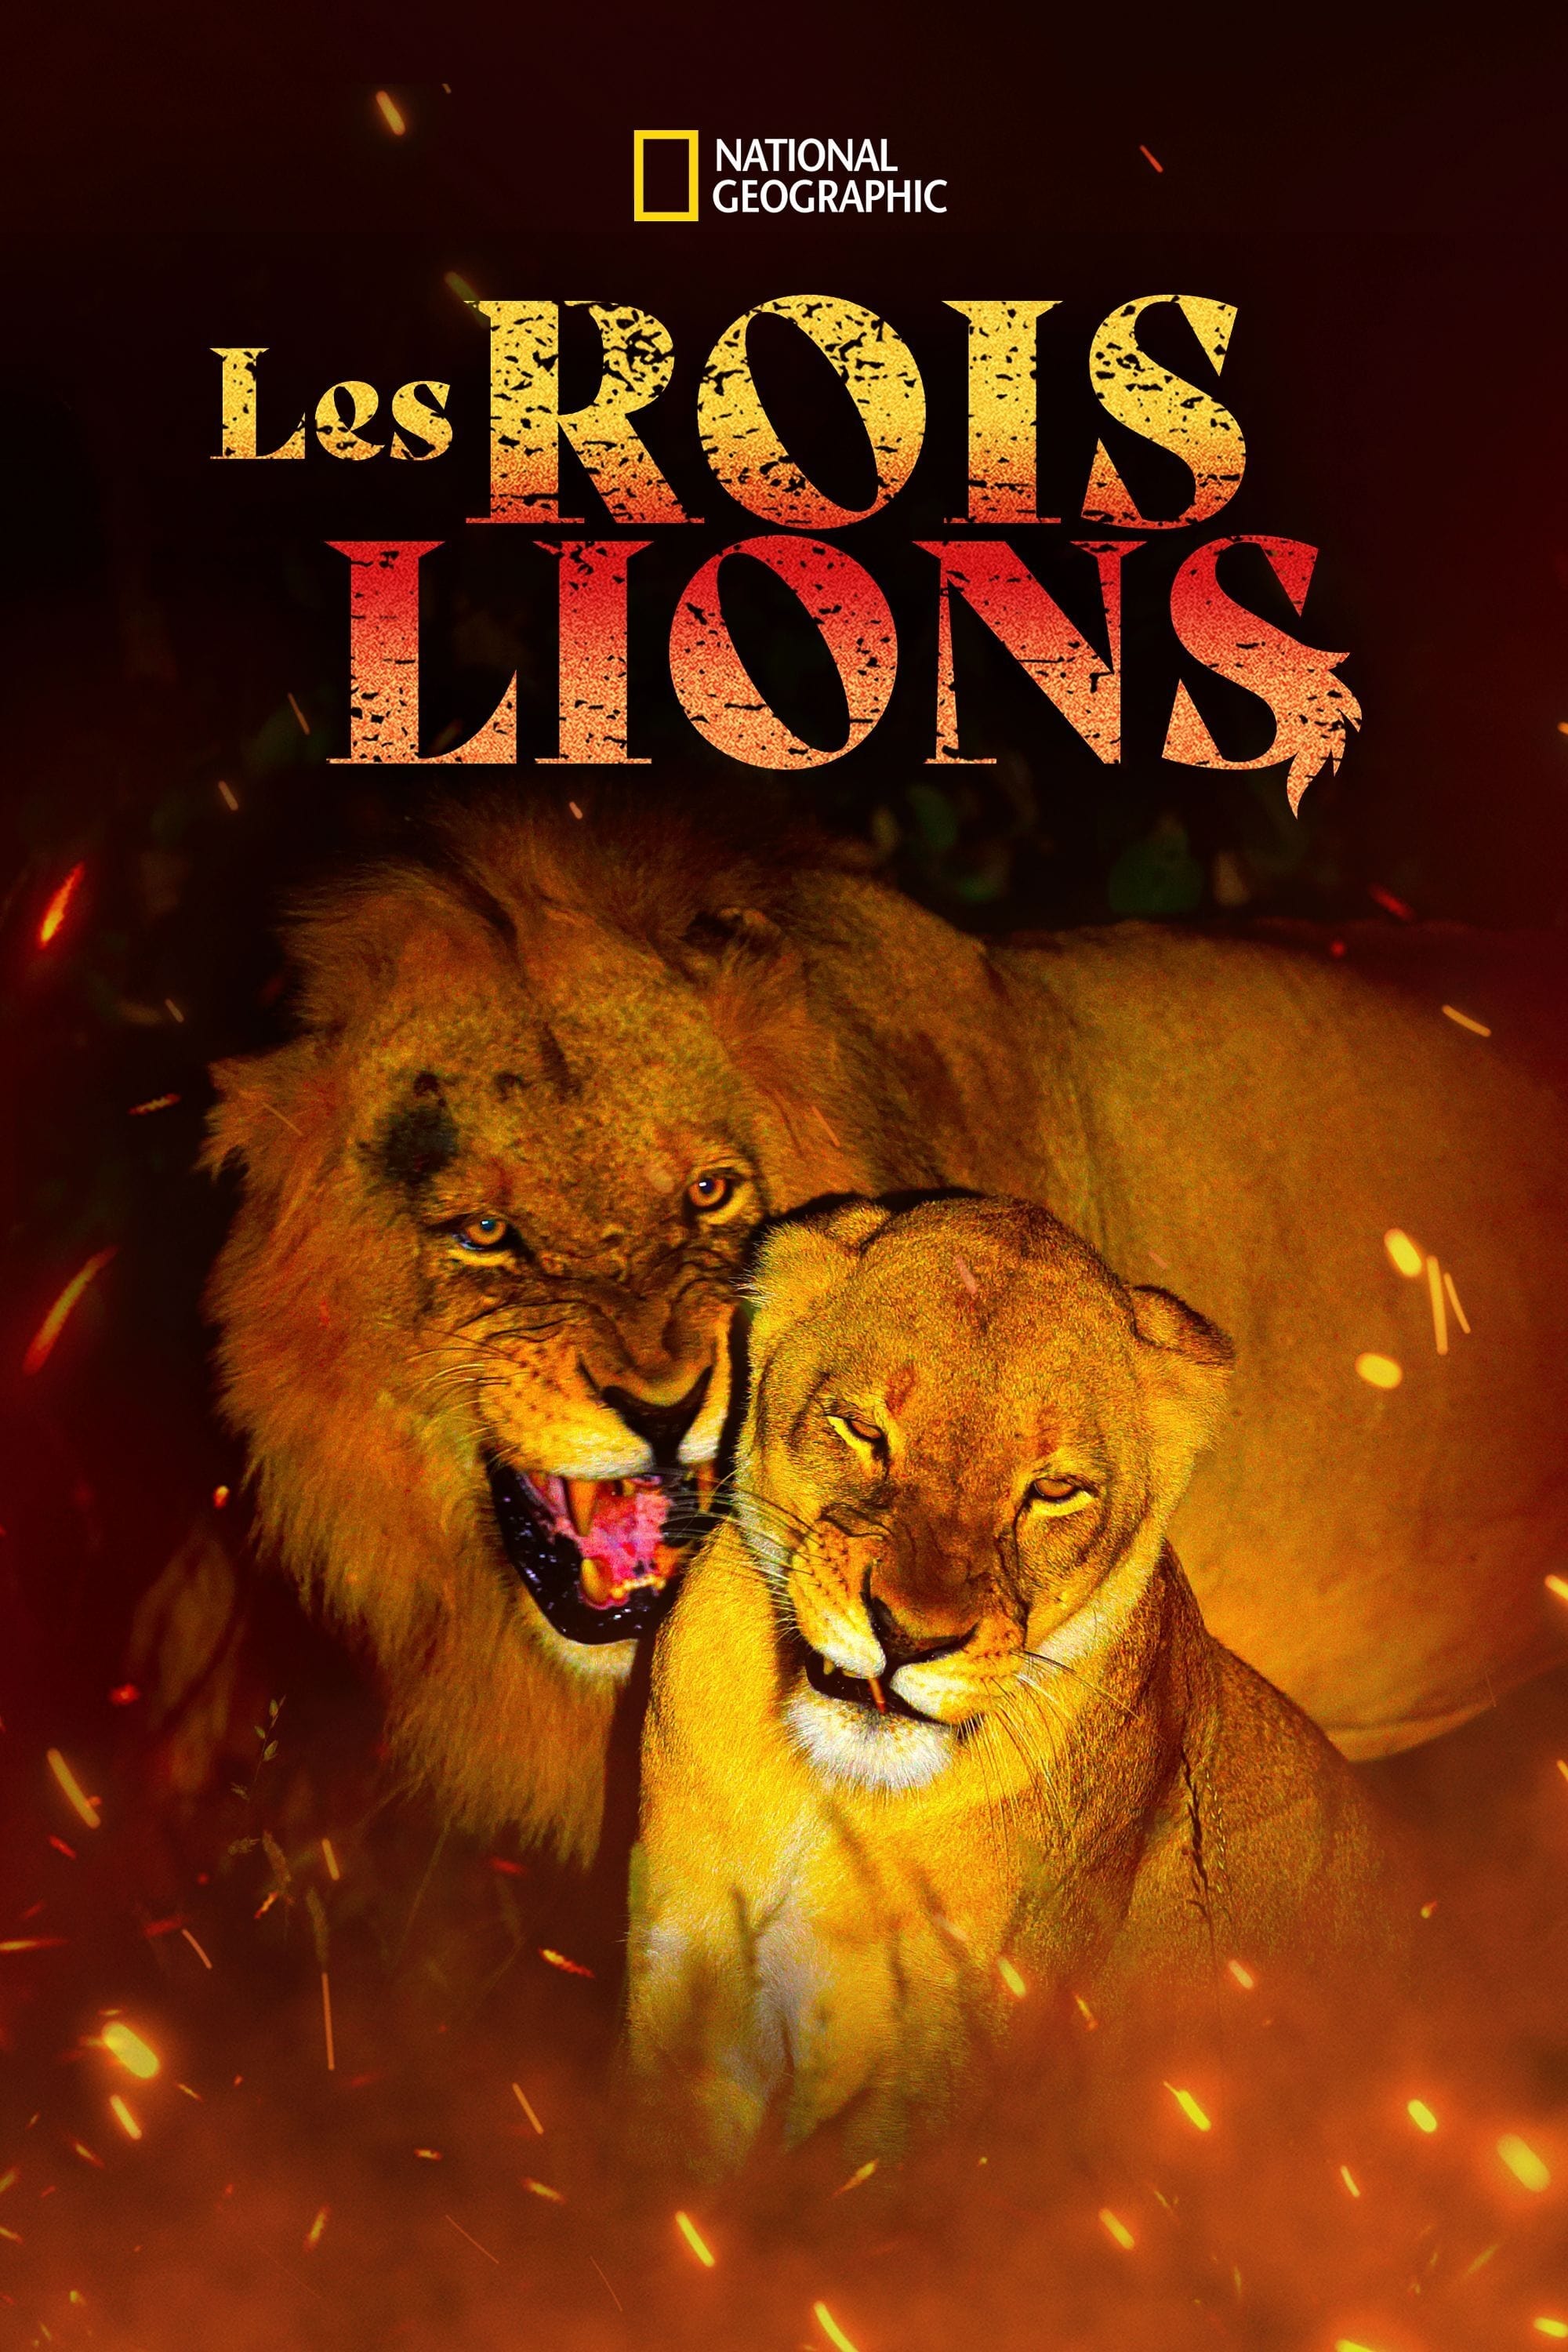 lion movie production company